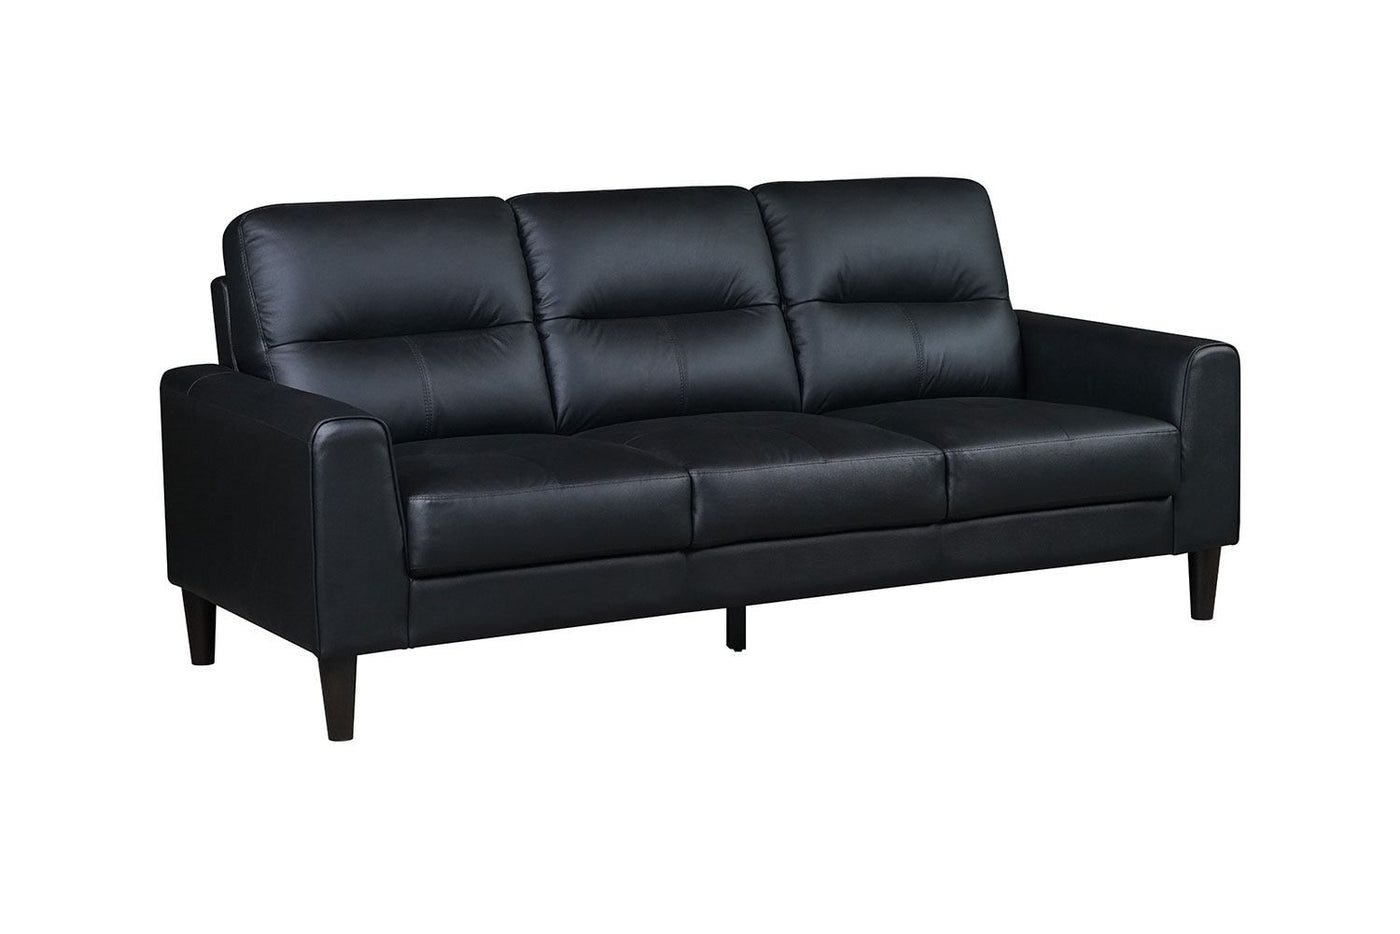 Verissimo Leather Sofa and Loveseat Set - Black